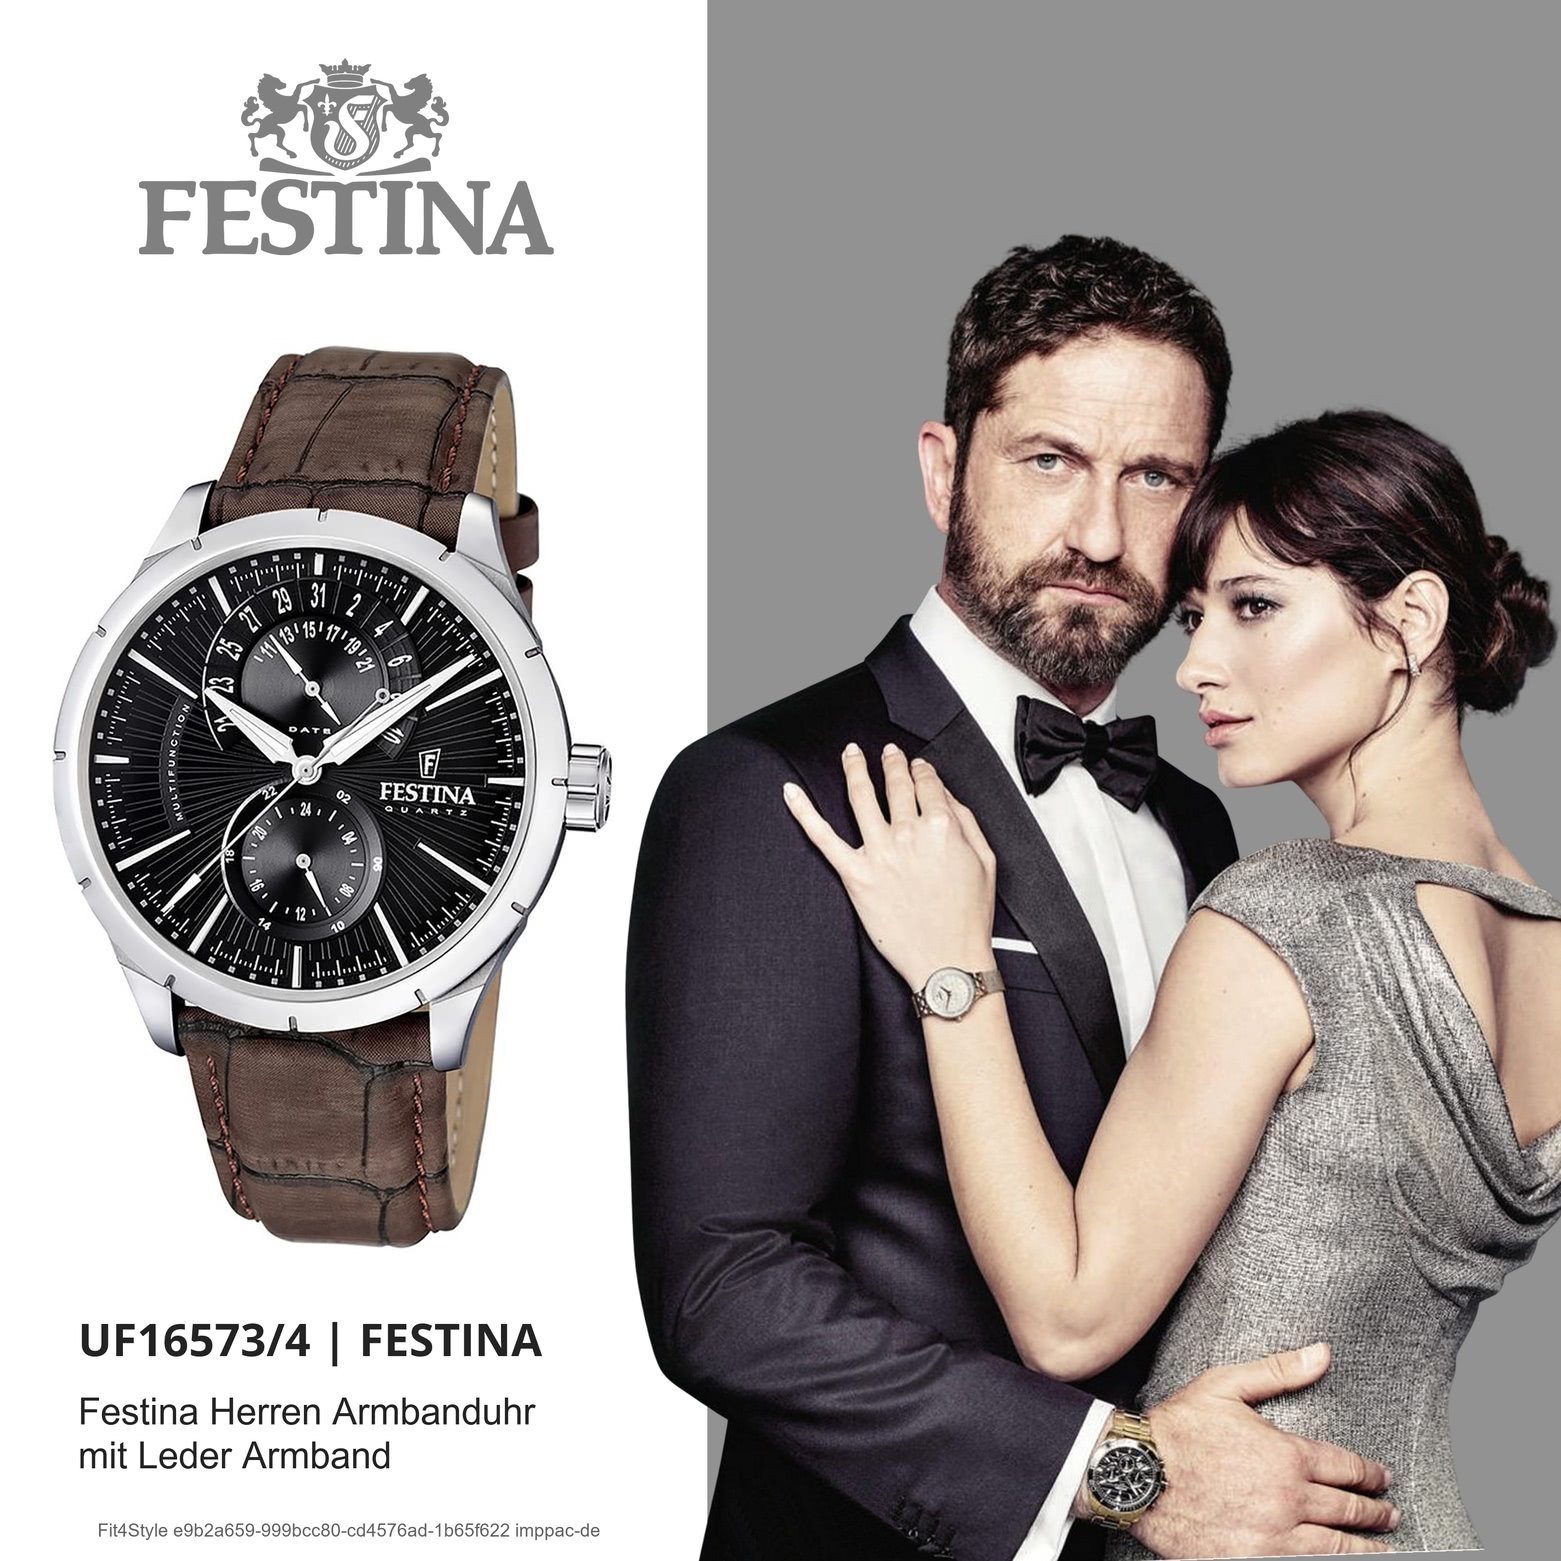 Lederarmband Herren Multifunktionsuhr Elegant Festina Festina braun-schwarz Uhr UF16573/X Armbanduhr Herren schwarz rund, F16573/X,